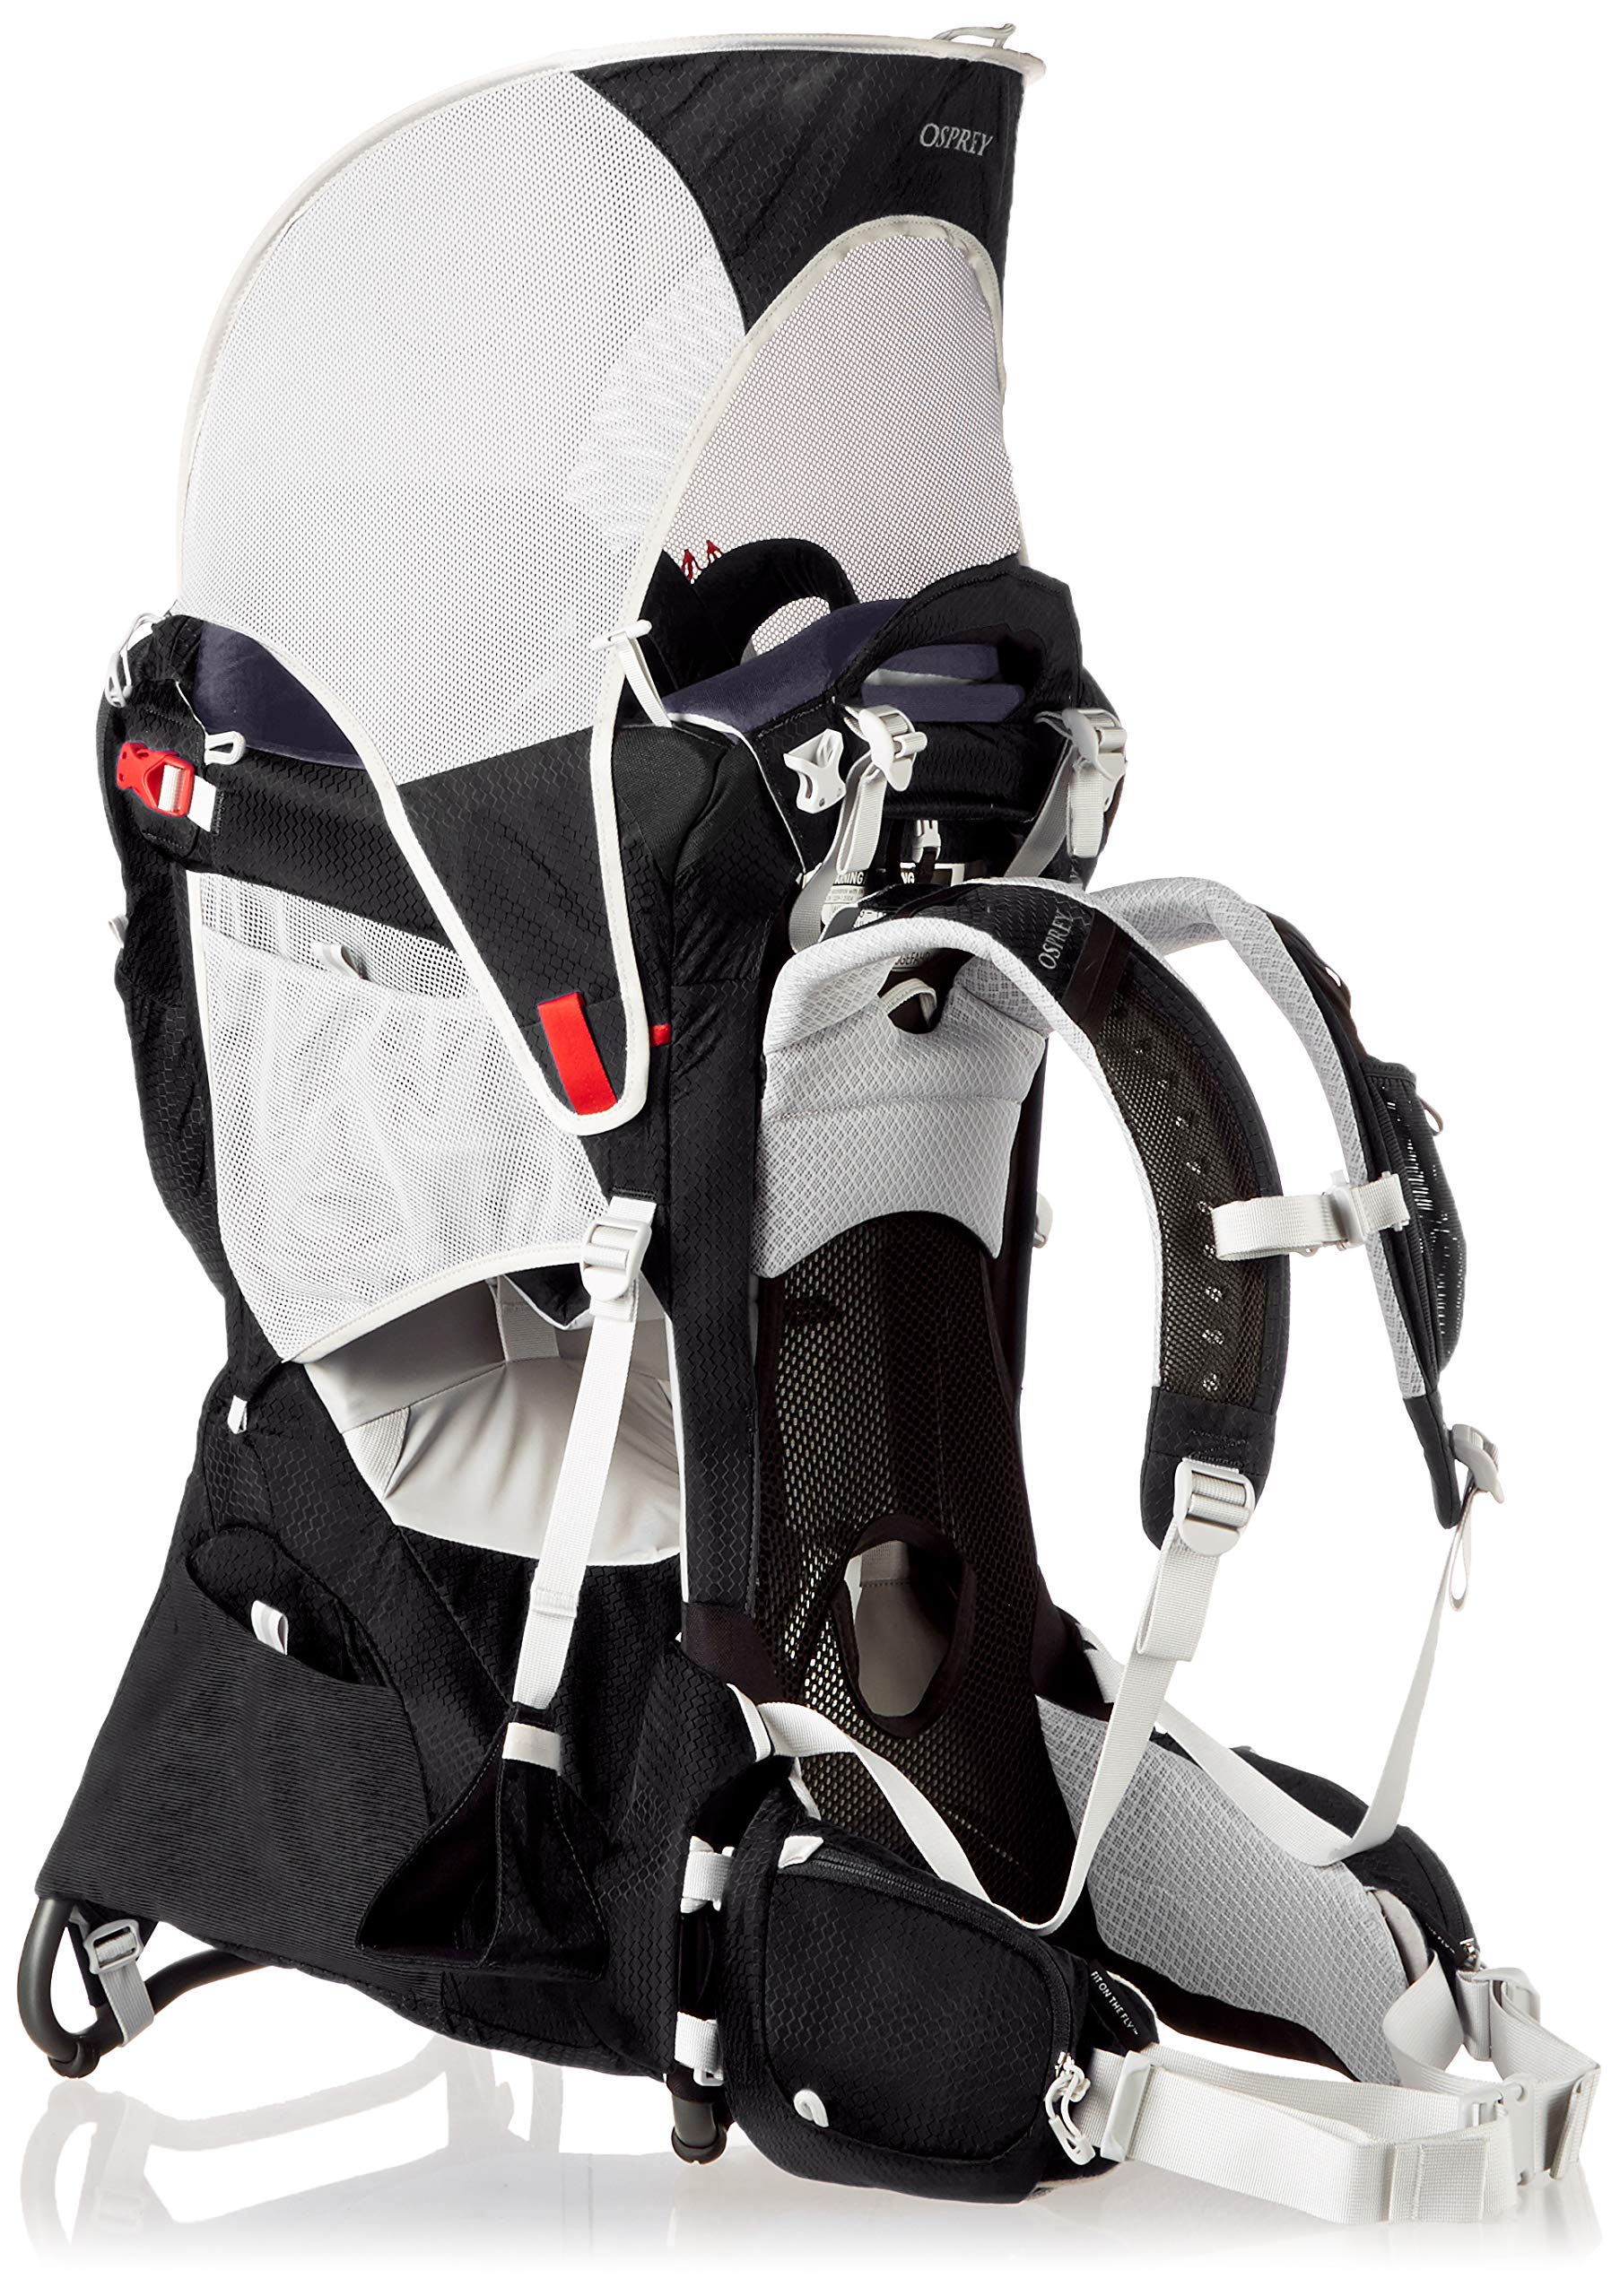 Osprey Poco Plus Child Carrier Backpack, Starry Black